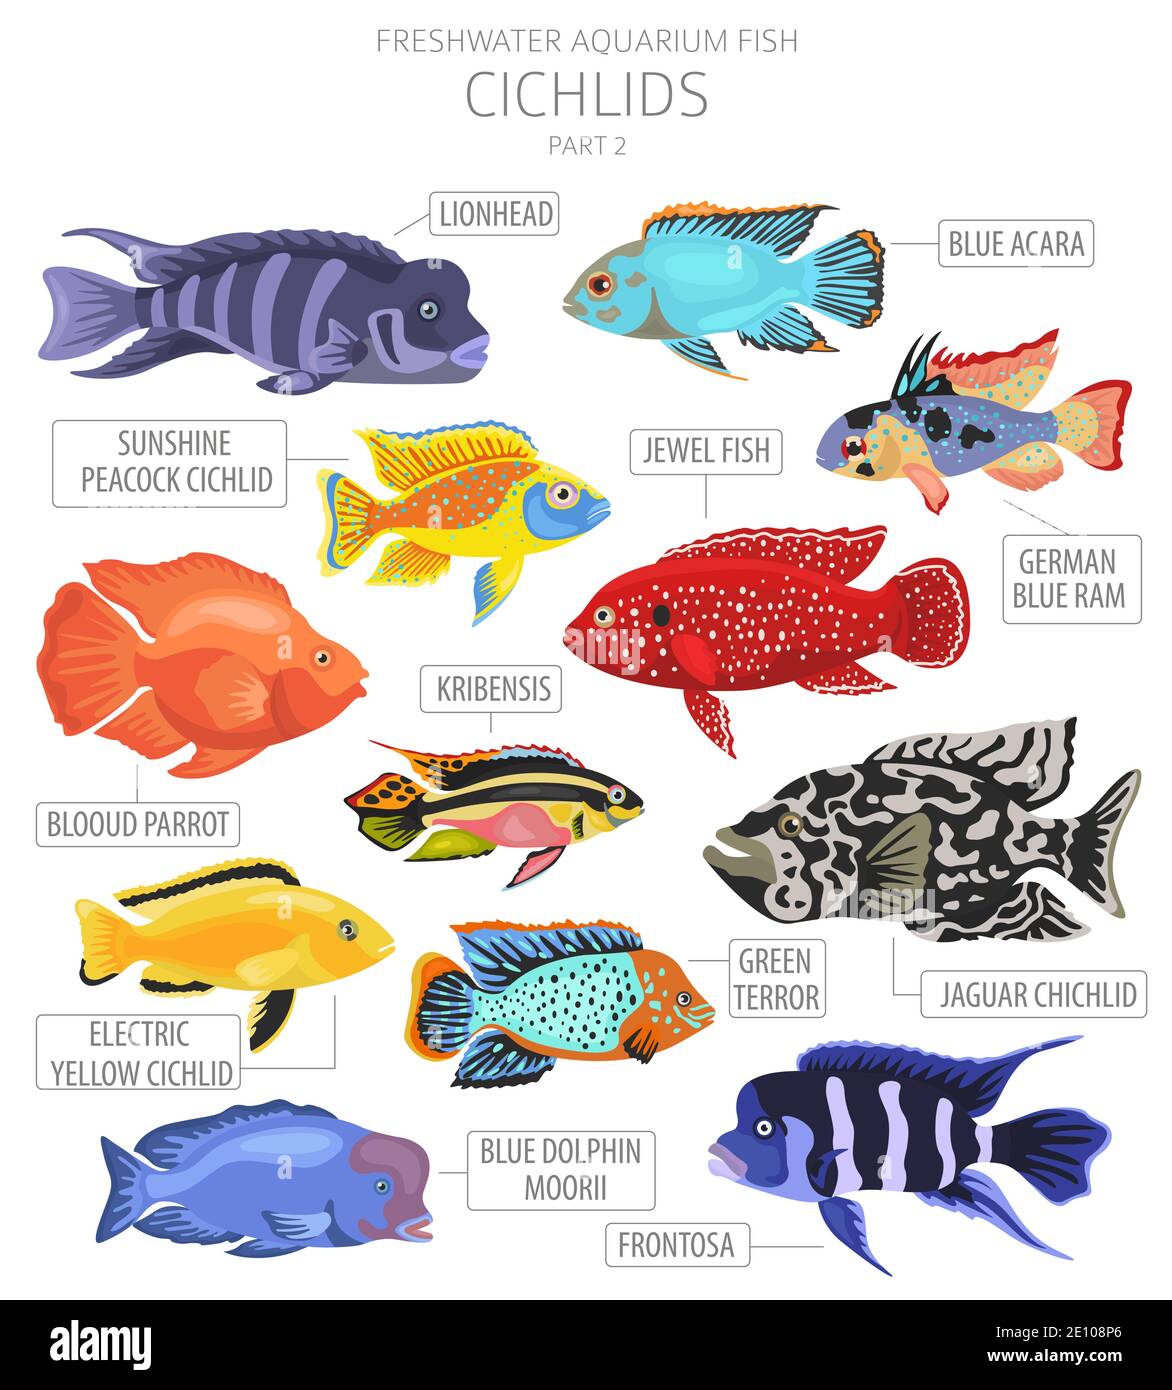 Cichlids fish. Freshwater aquarium fish icon set flat style isolated on white.  Vector illustration Stock Vector